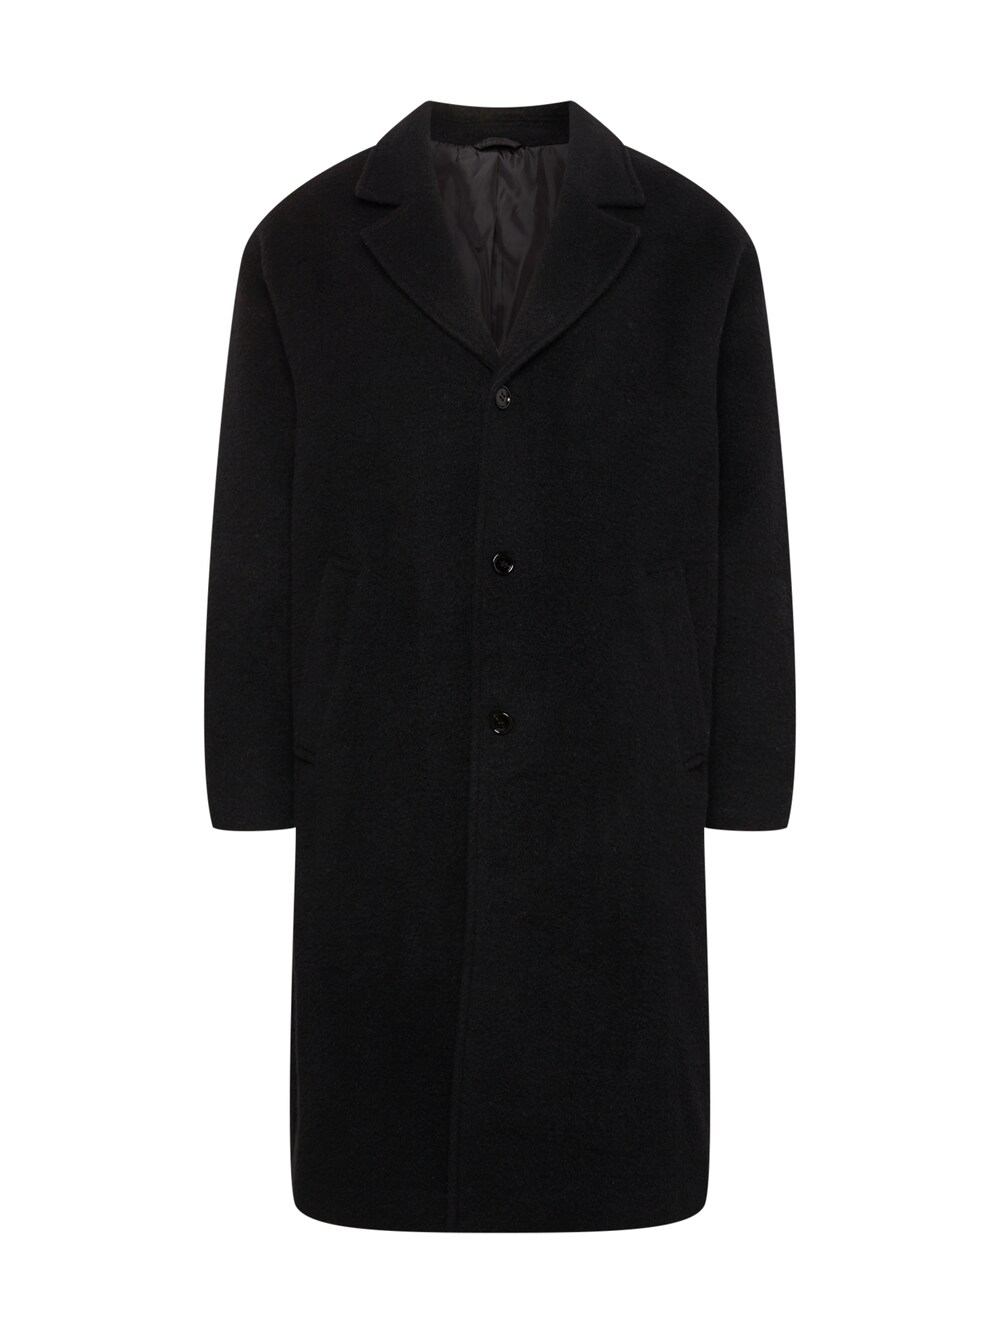 Межсезонное пальто Weekday Albin, черный межсезонное пальто weekday черный